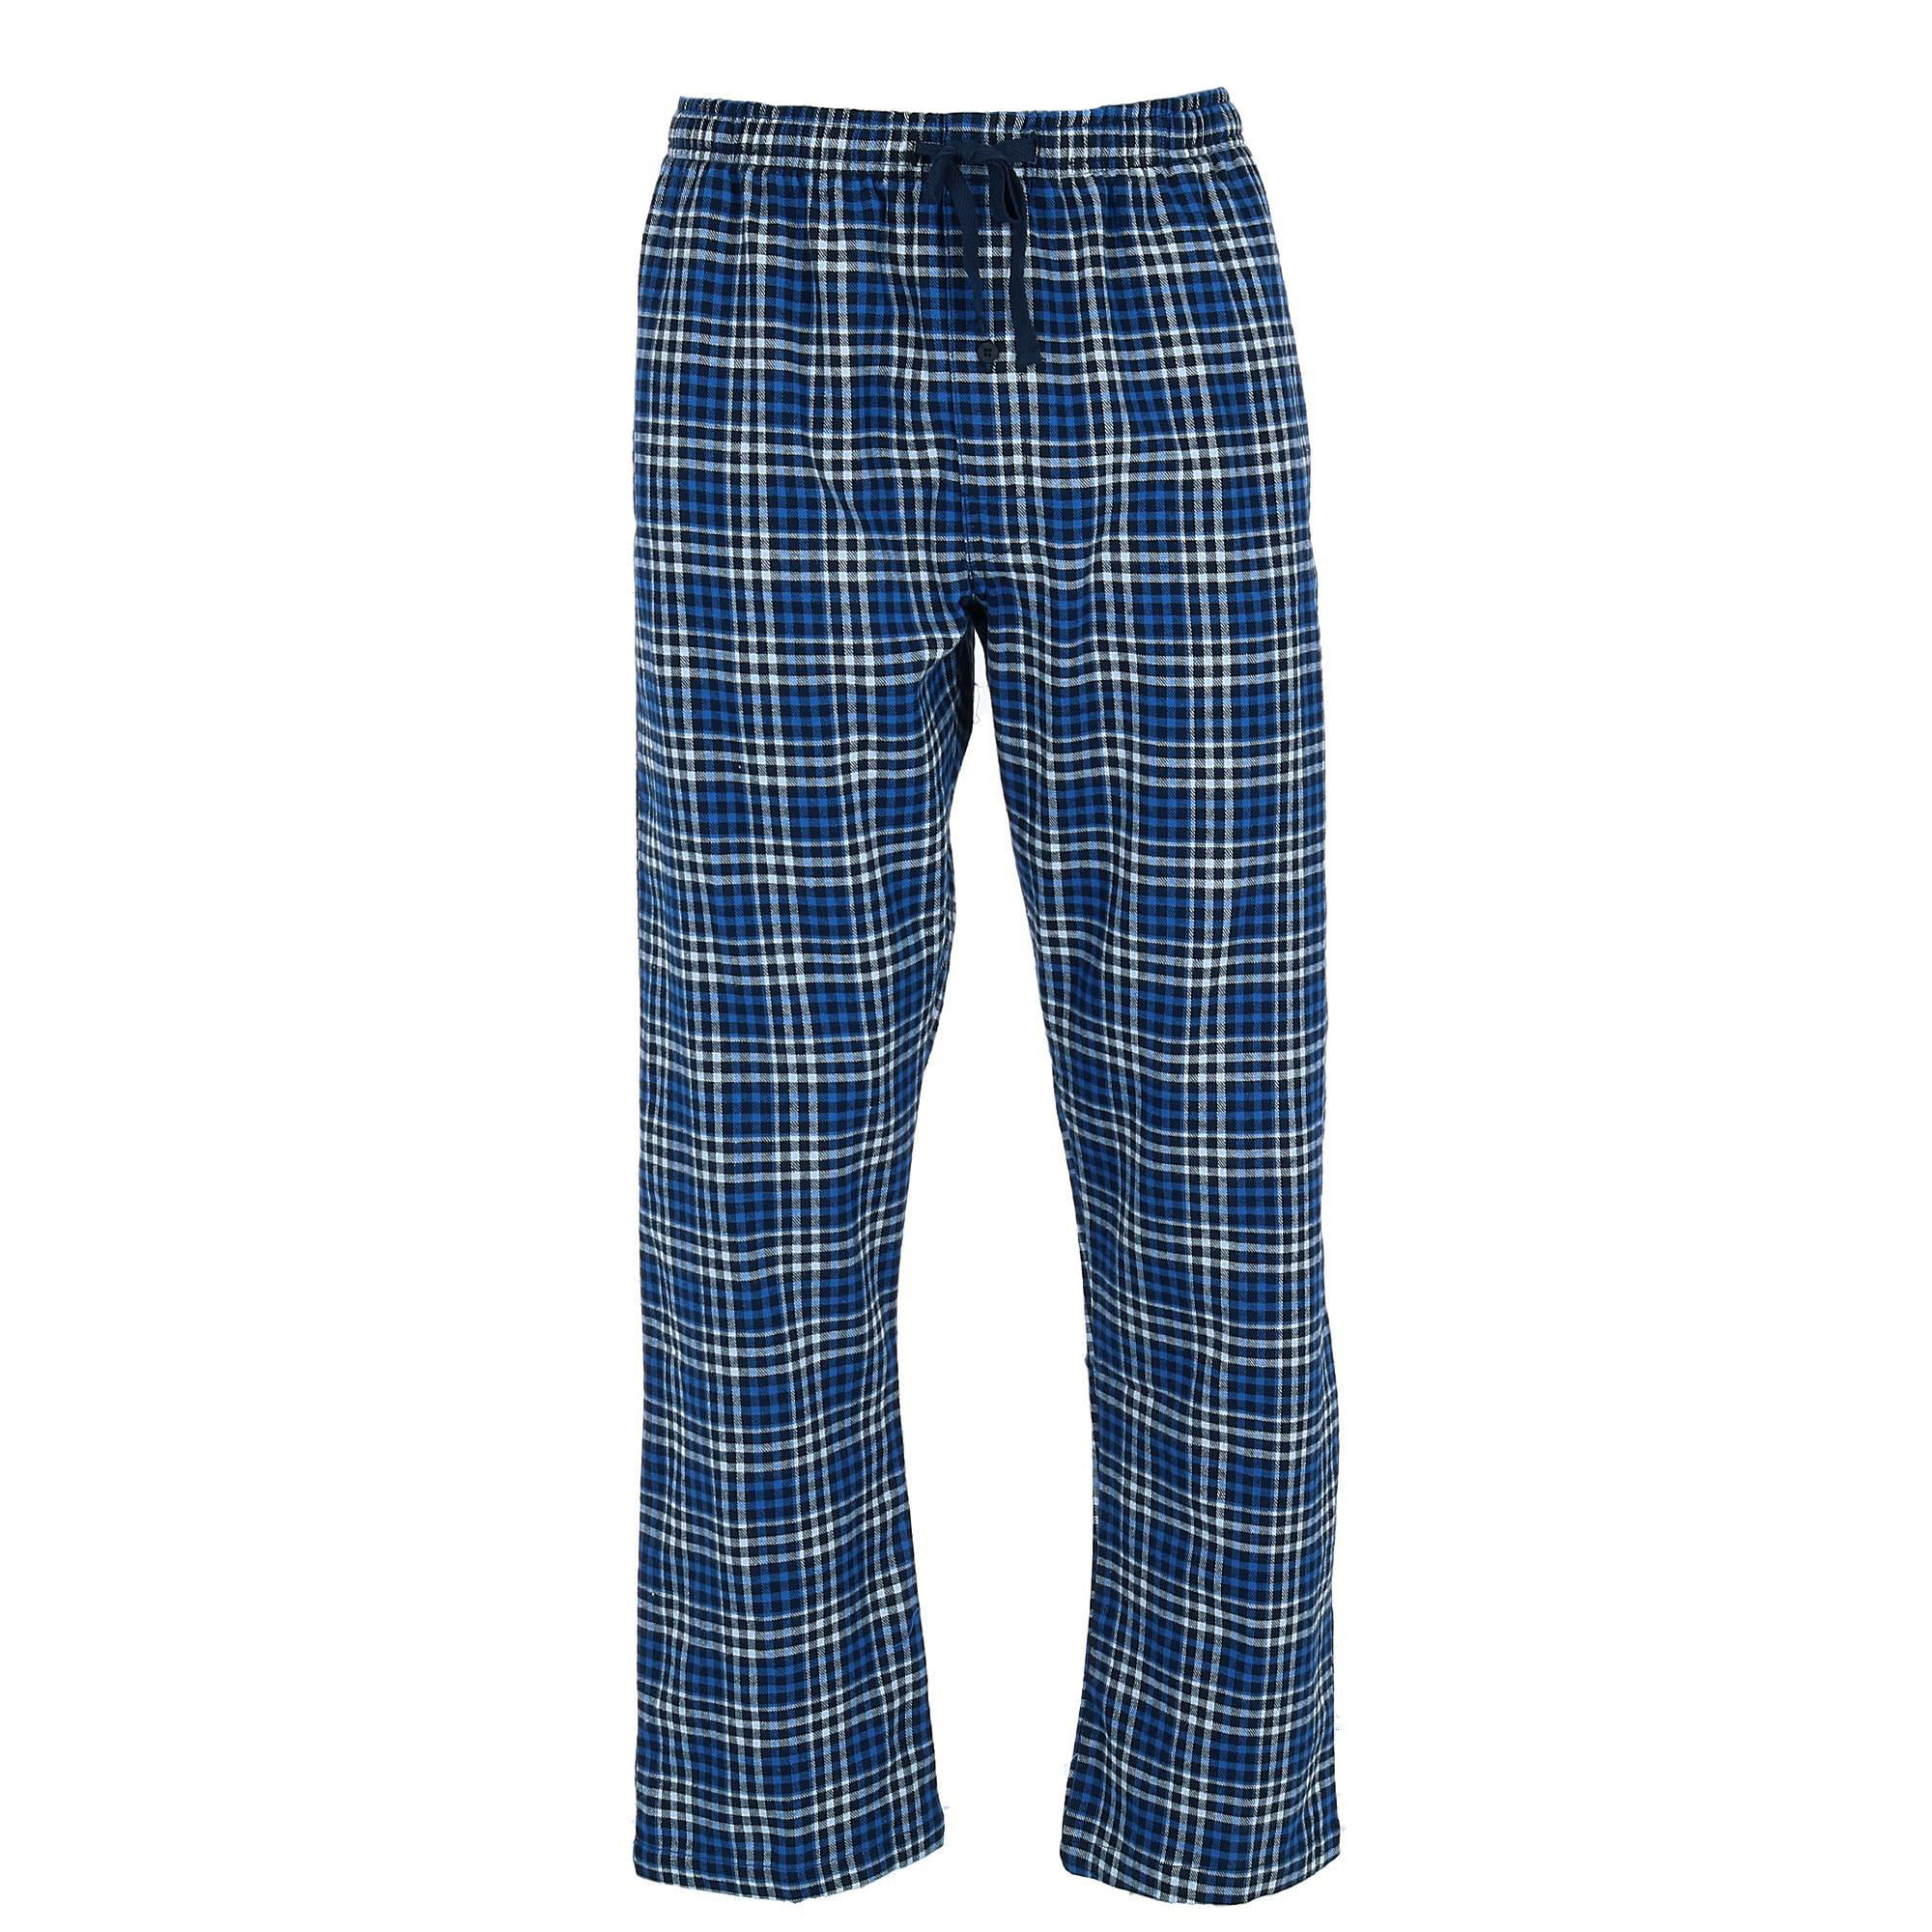 Hanes Men's Flannel Pajama Lounge Pants | Walmart Canada